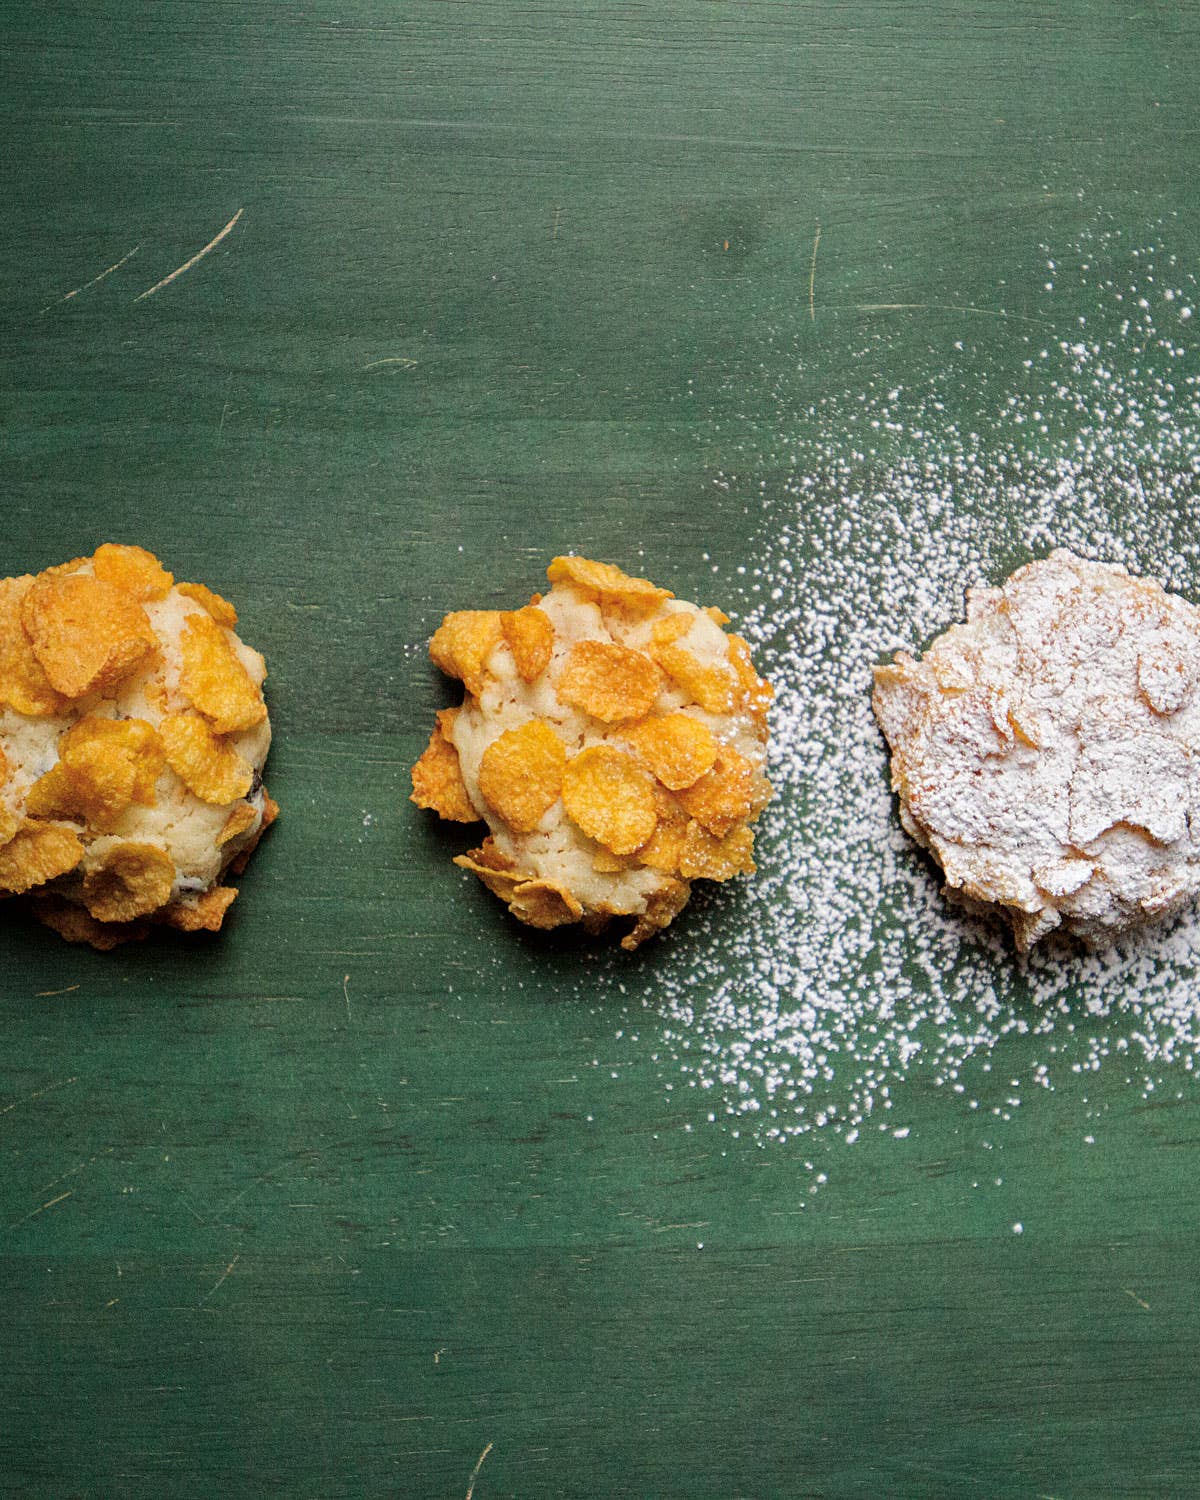 Umbrian Snowflake Cookies (Biscotti ai Cereali)